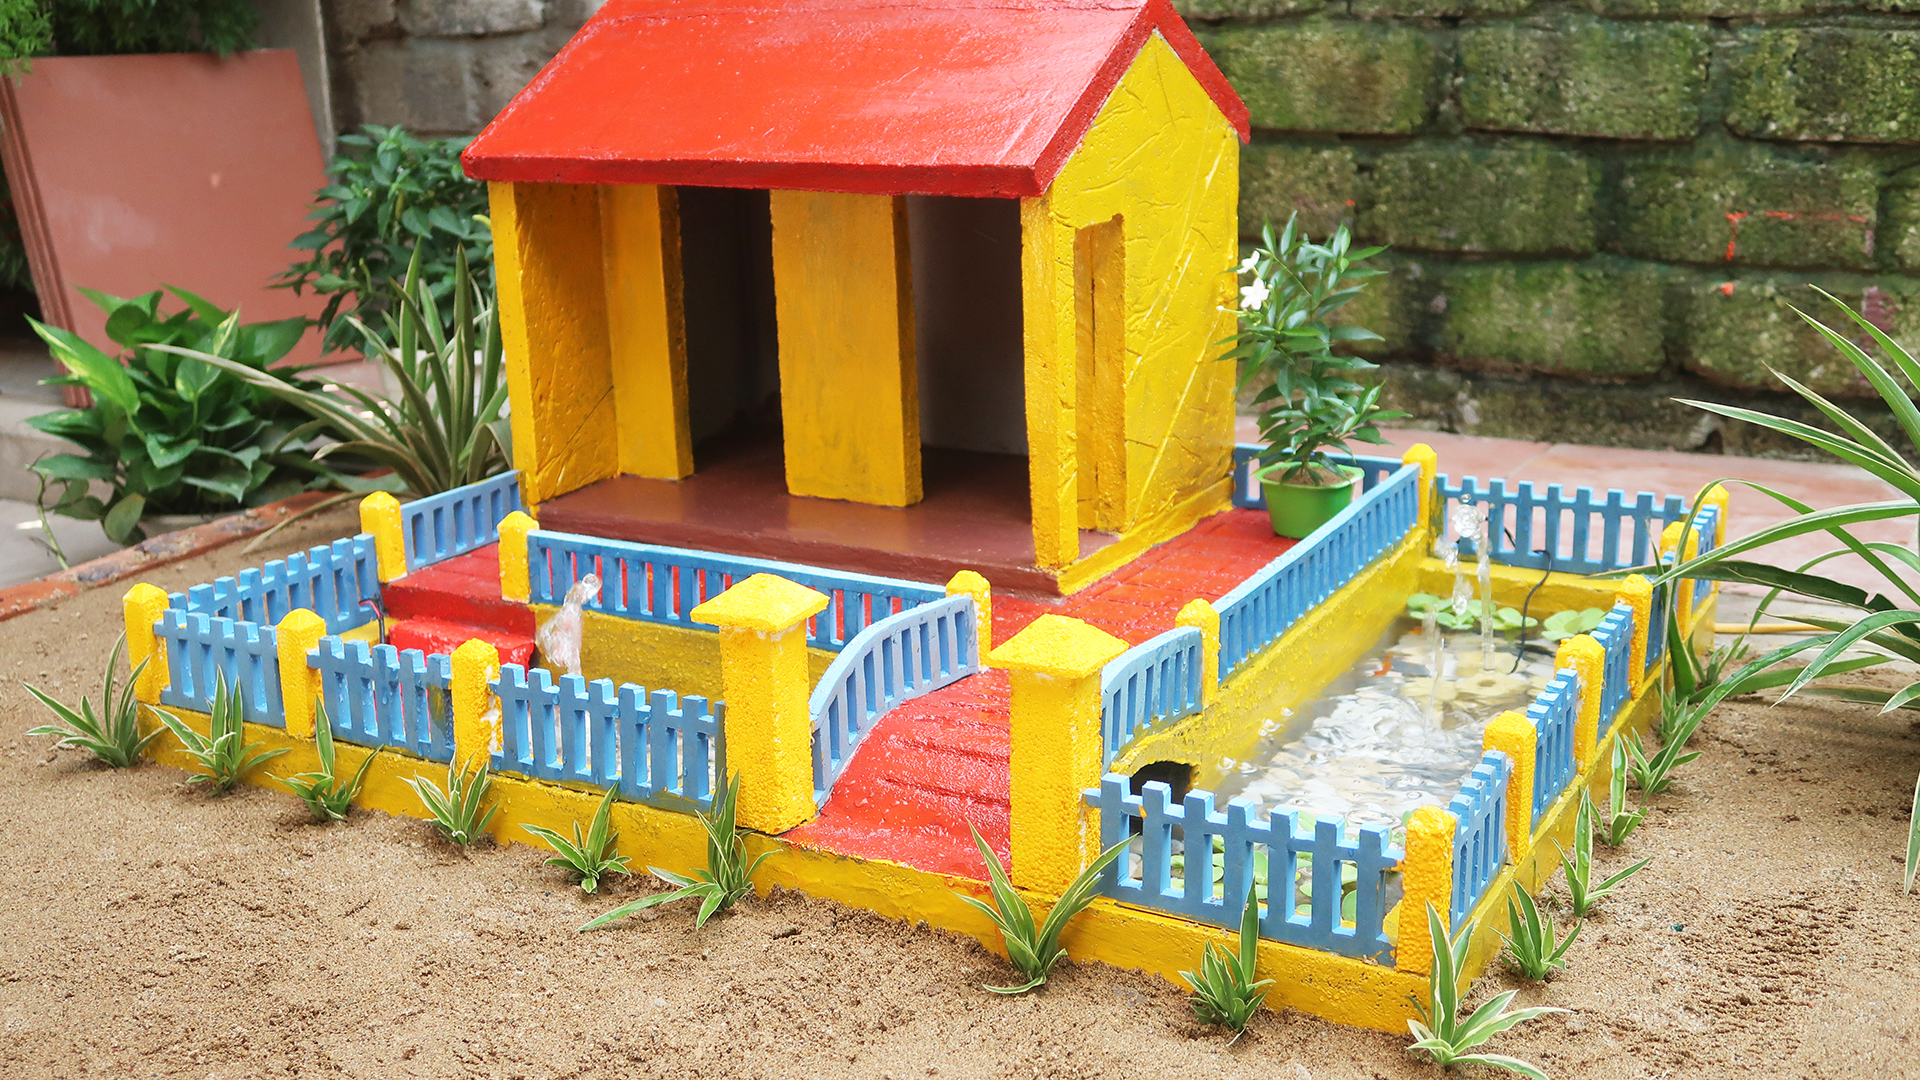 DIY beautiful miniature garden house, Home garden aquarium ideas from cement